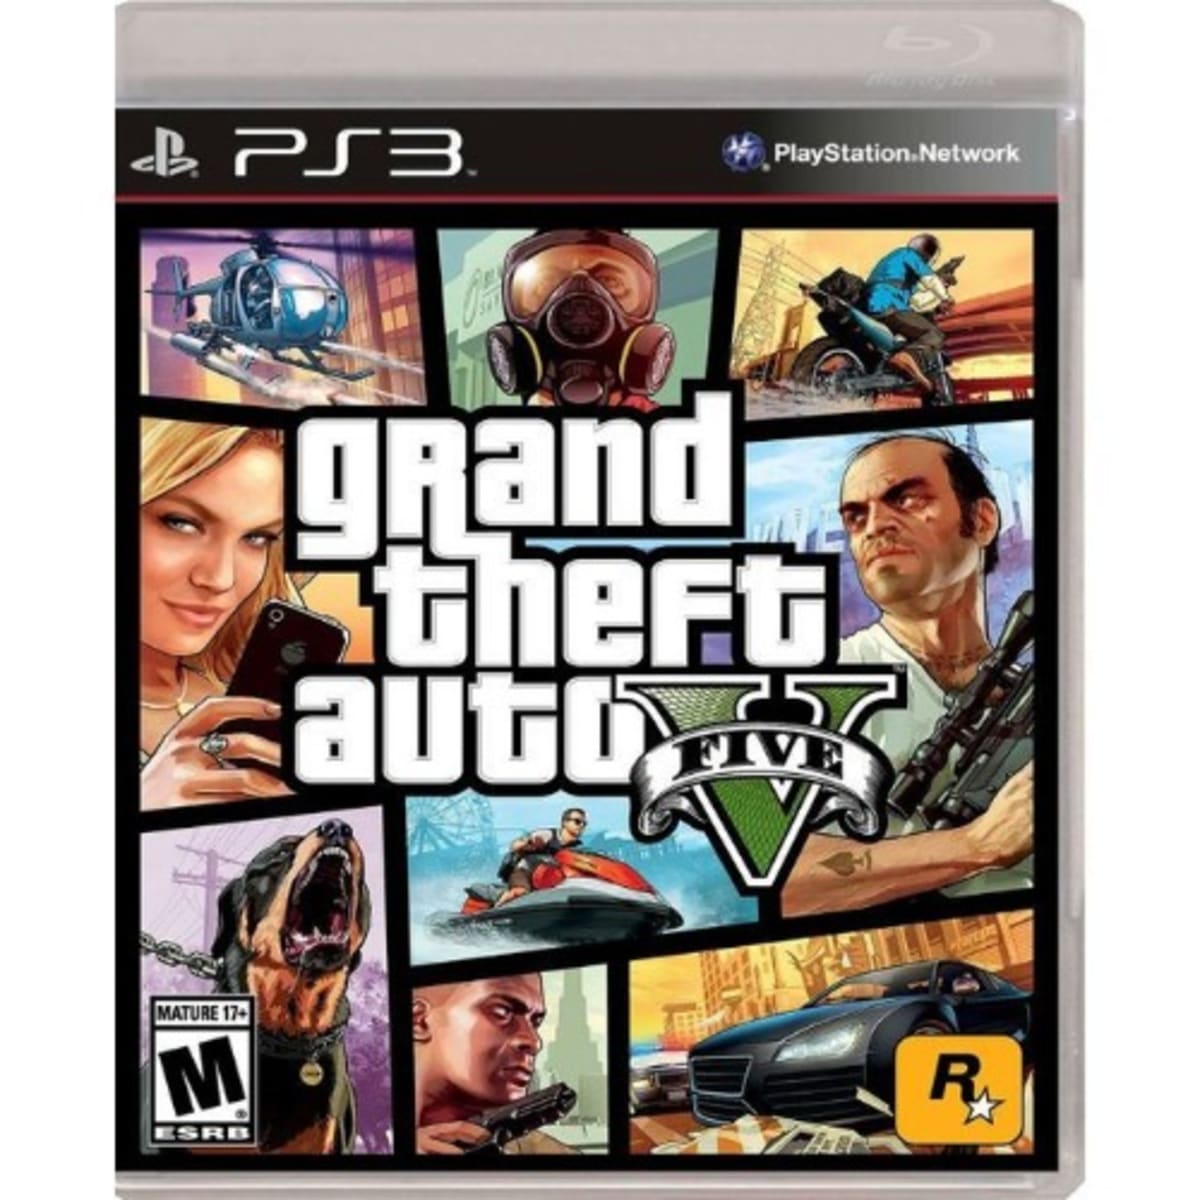 Grand Theft Auto V - Gta 5 - Ps3